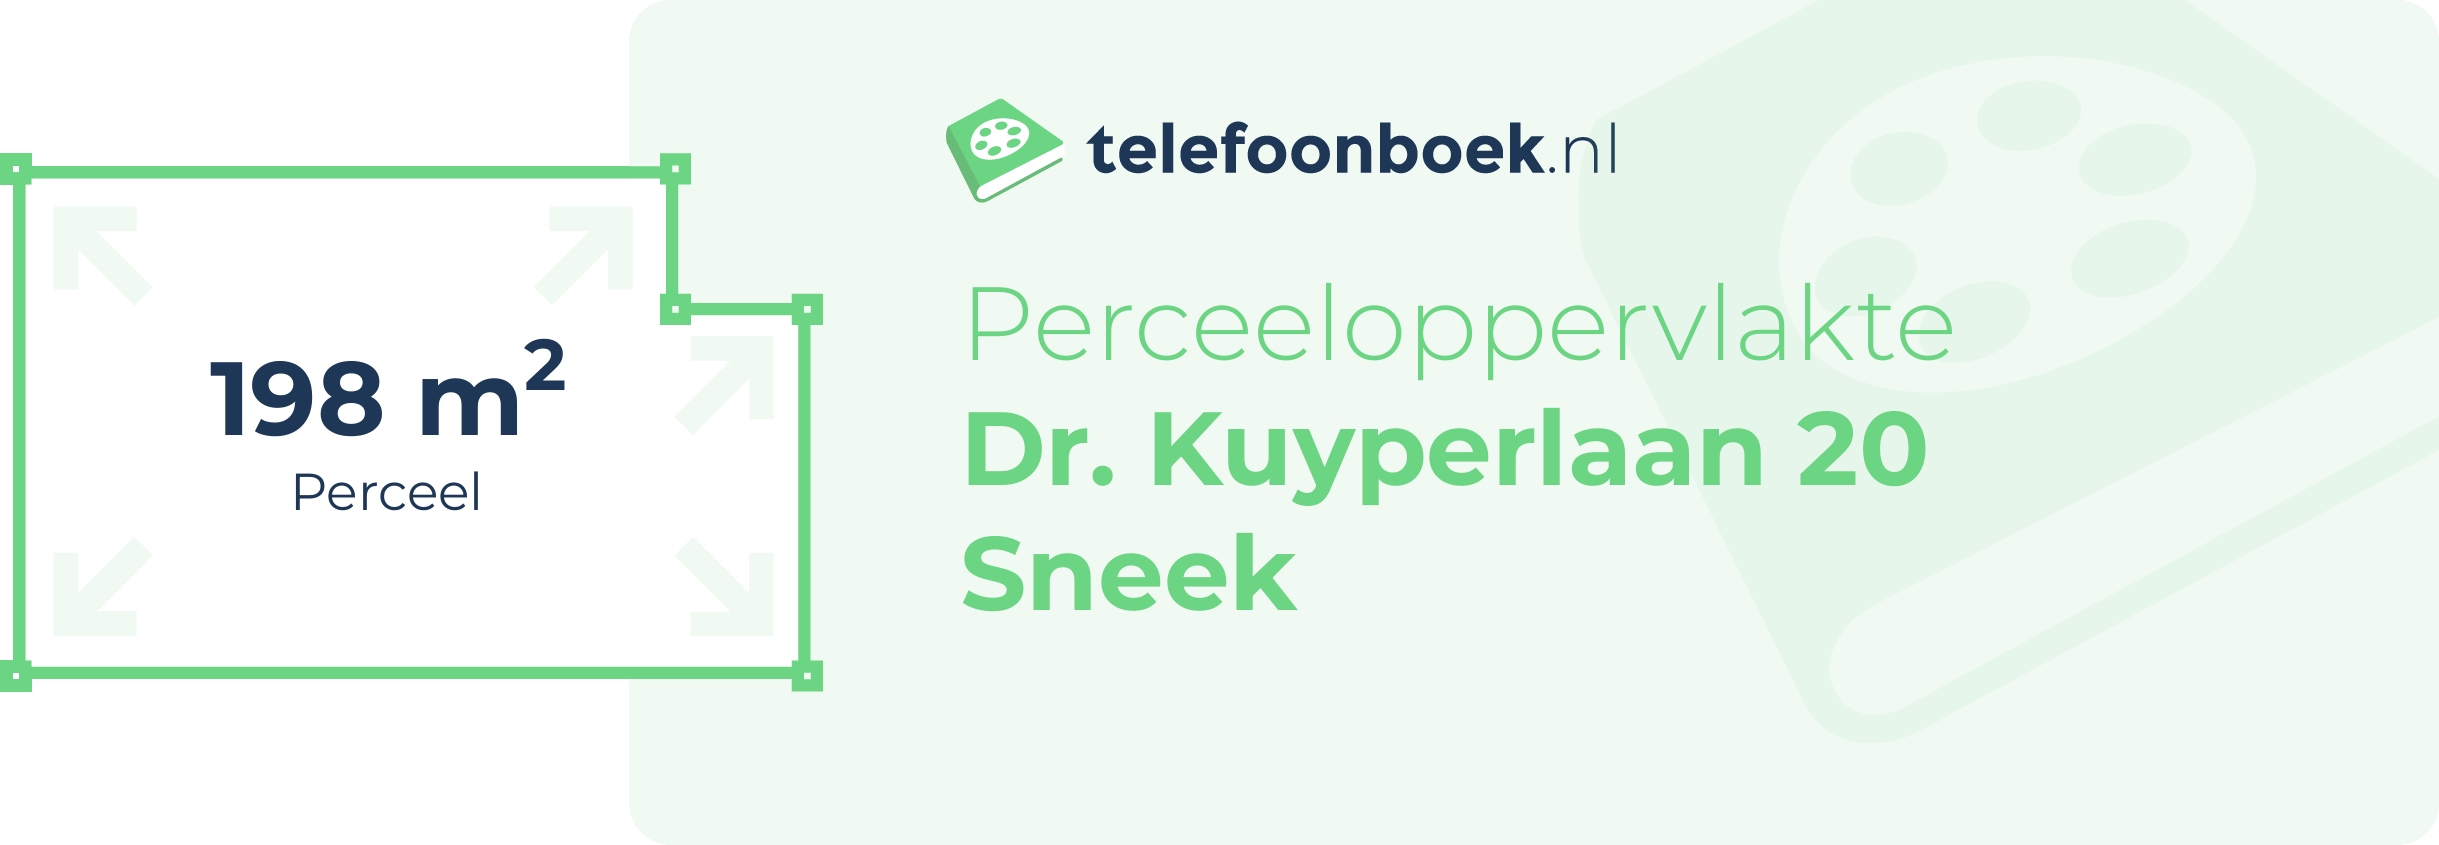 Perceeloppervlakte Dr. Kuyperlaan 20 Sneek